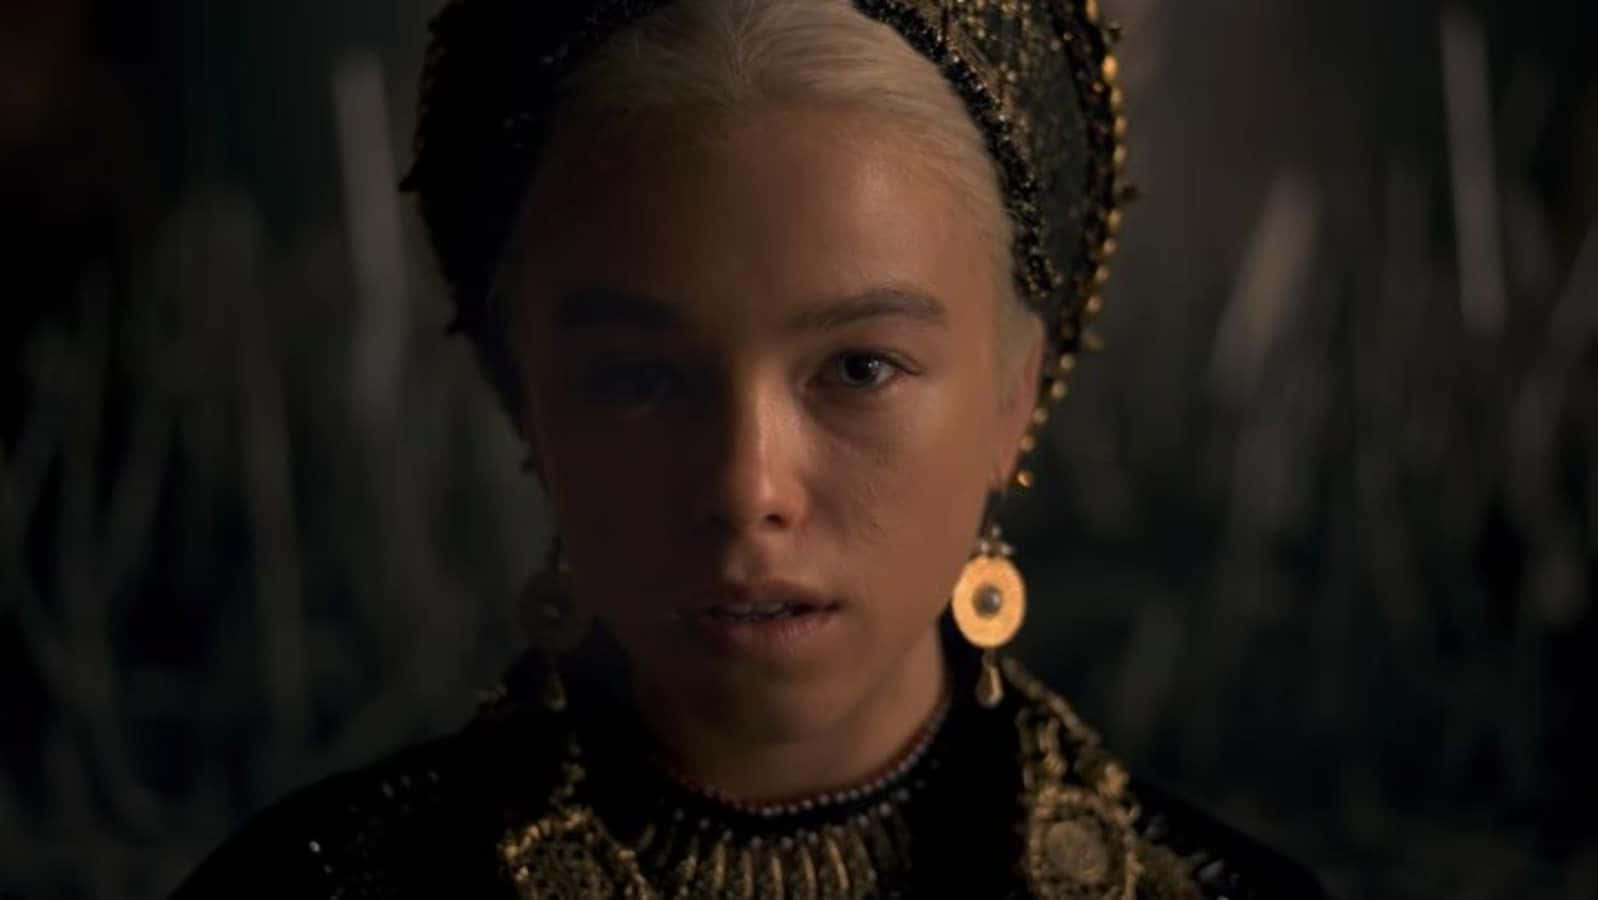 Rhaenyra Targaryen Close-Up With Earrings Wallpaper